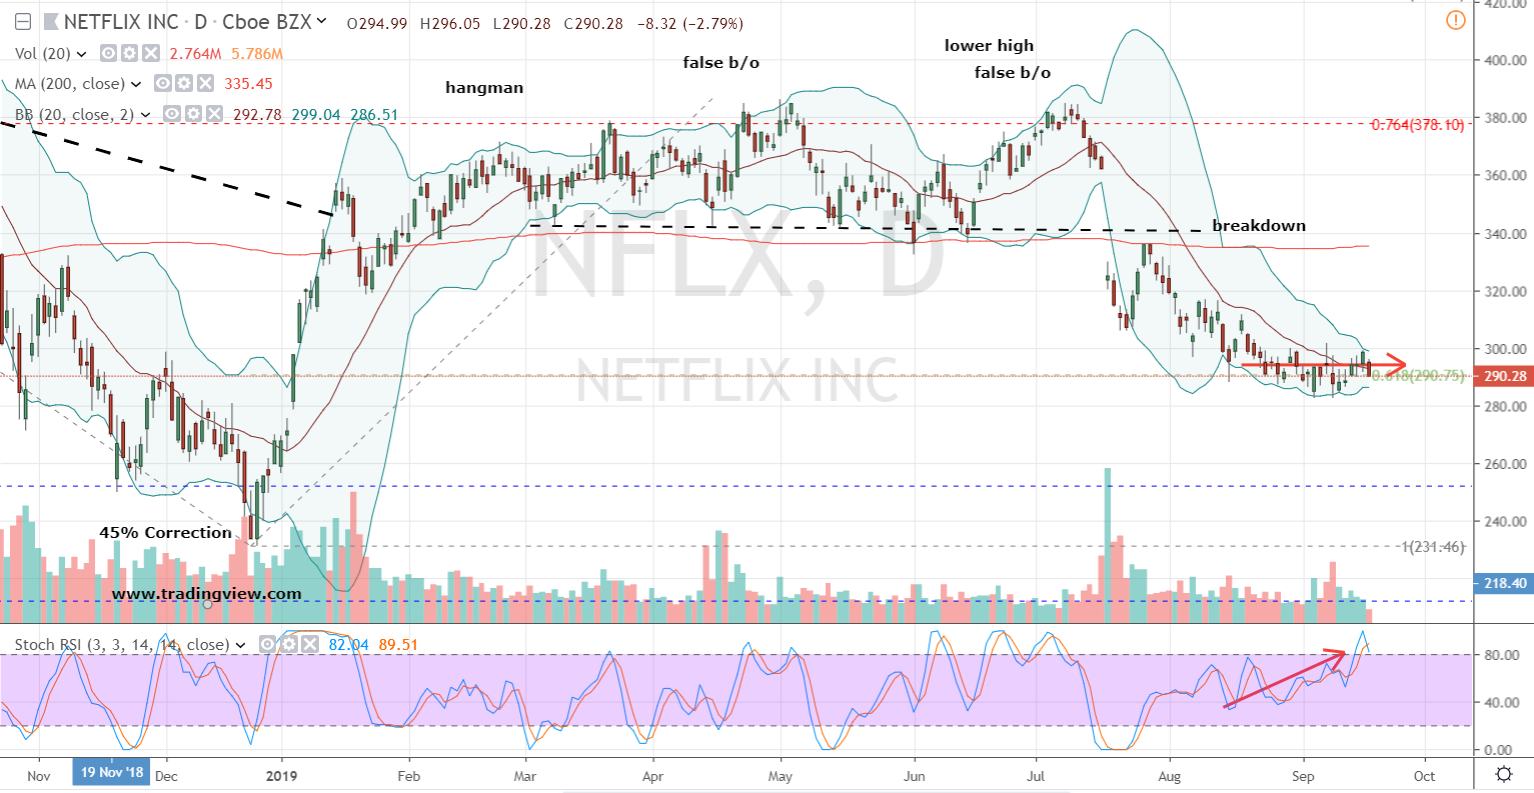 Netflix Stock Price Chart